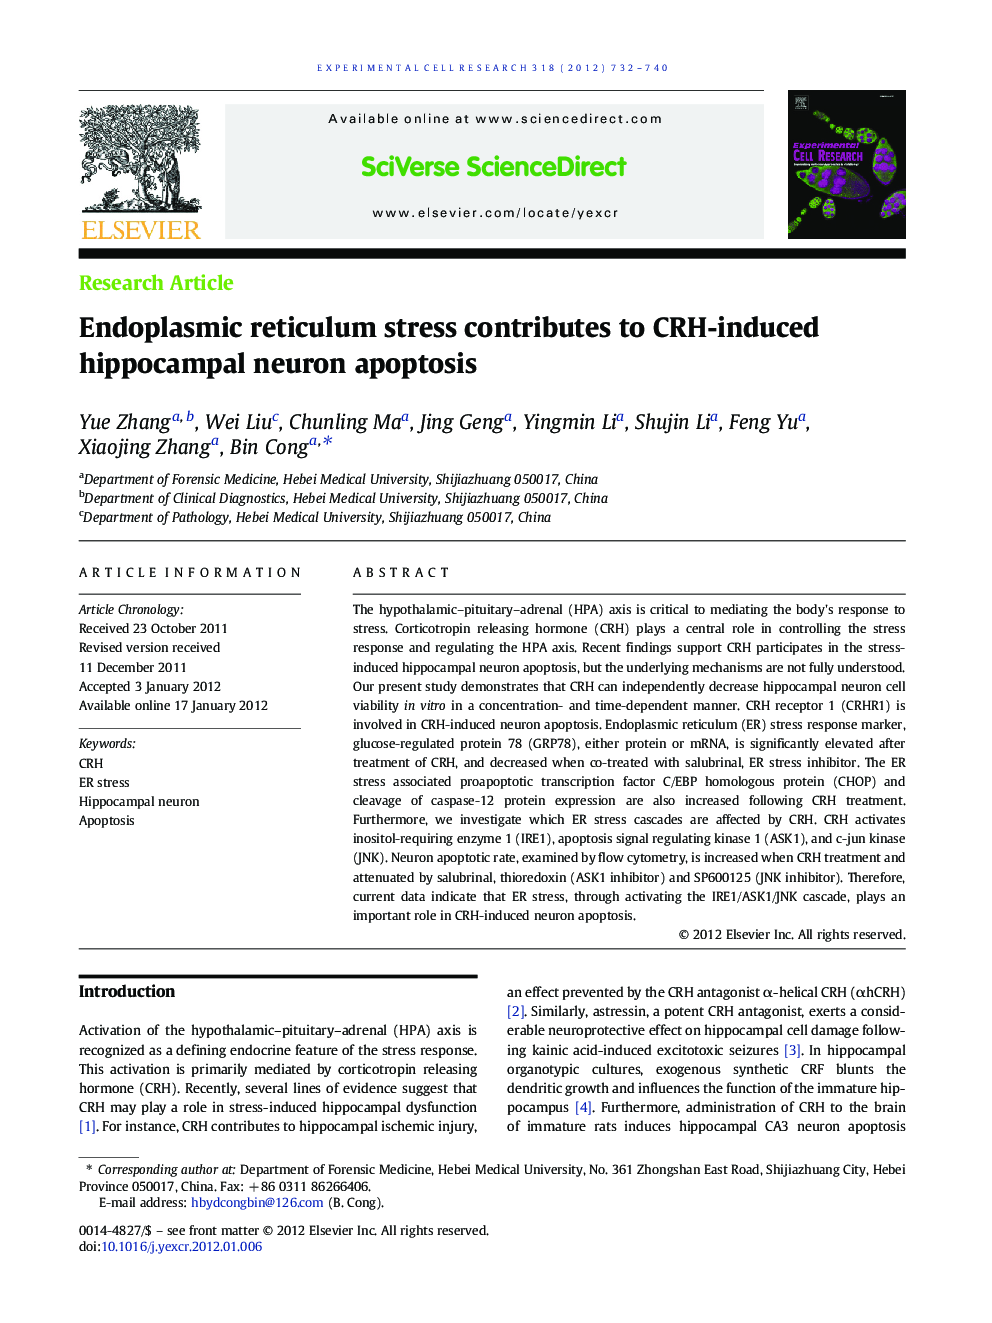 Endoplasmic reticulum stress contributes to CRH-induced hippocampal neuron apoptosis